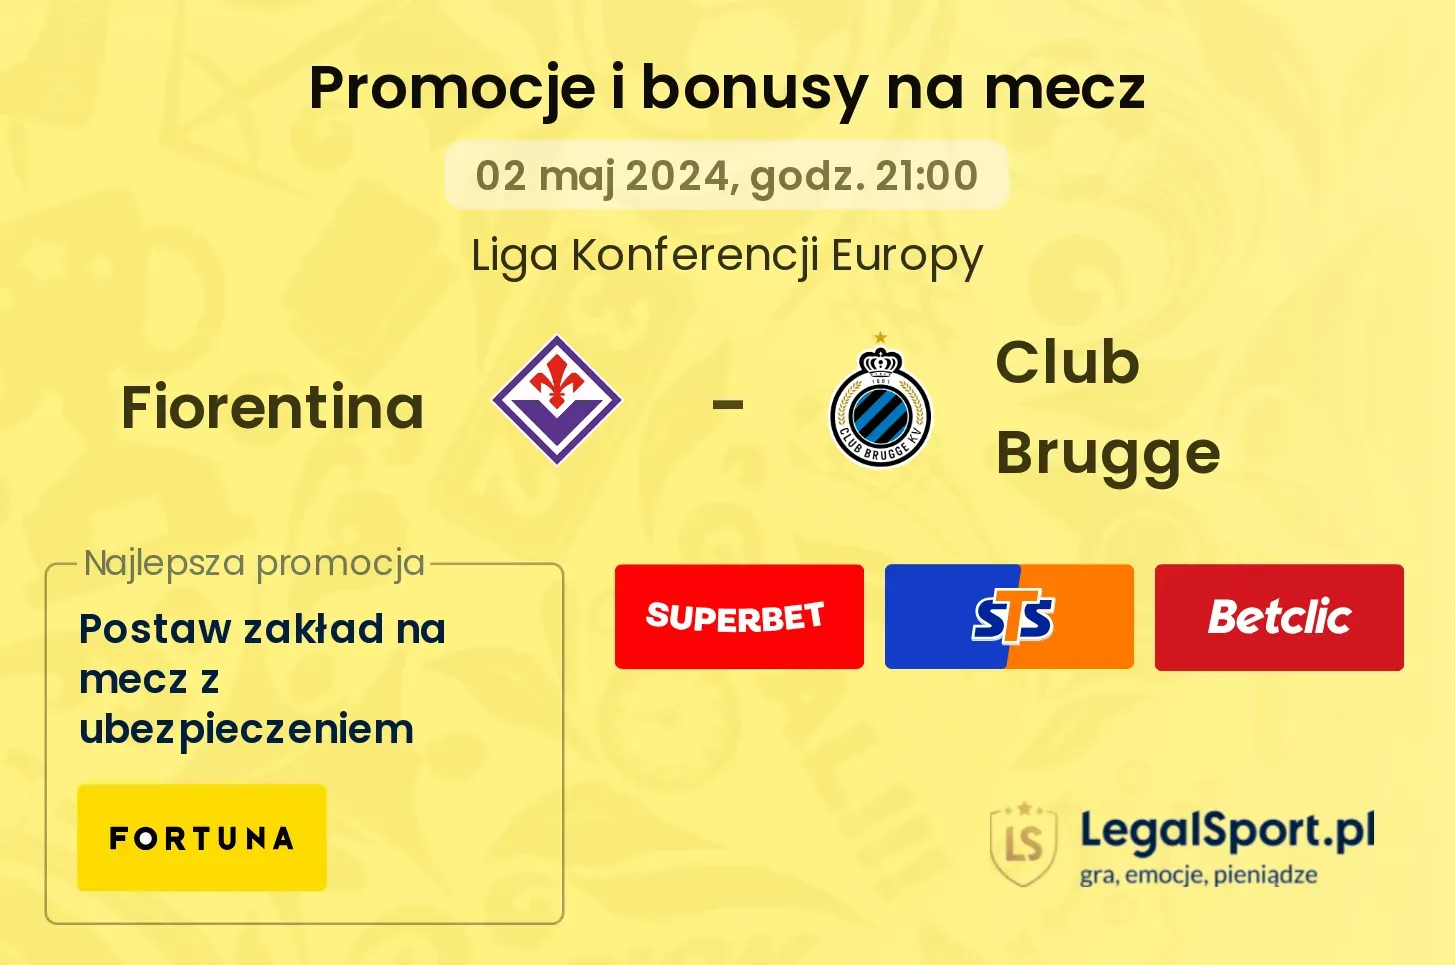 Fiorentina - Club Brugge promocje bonusy na mecz